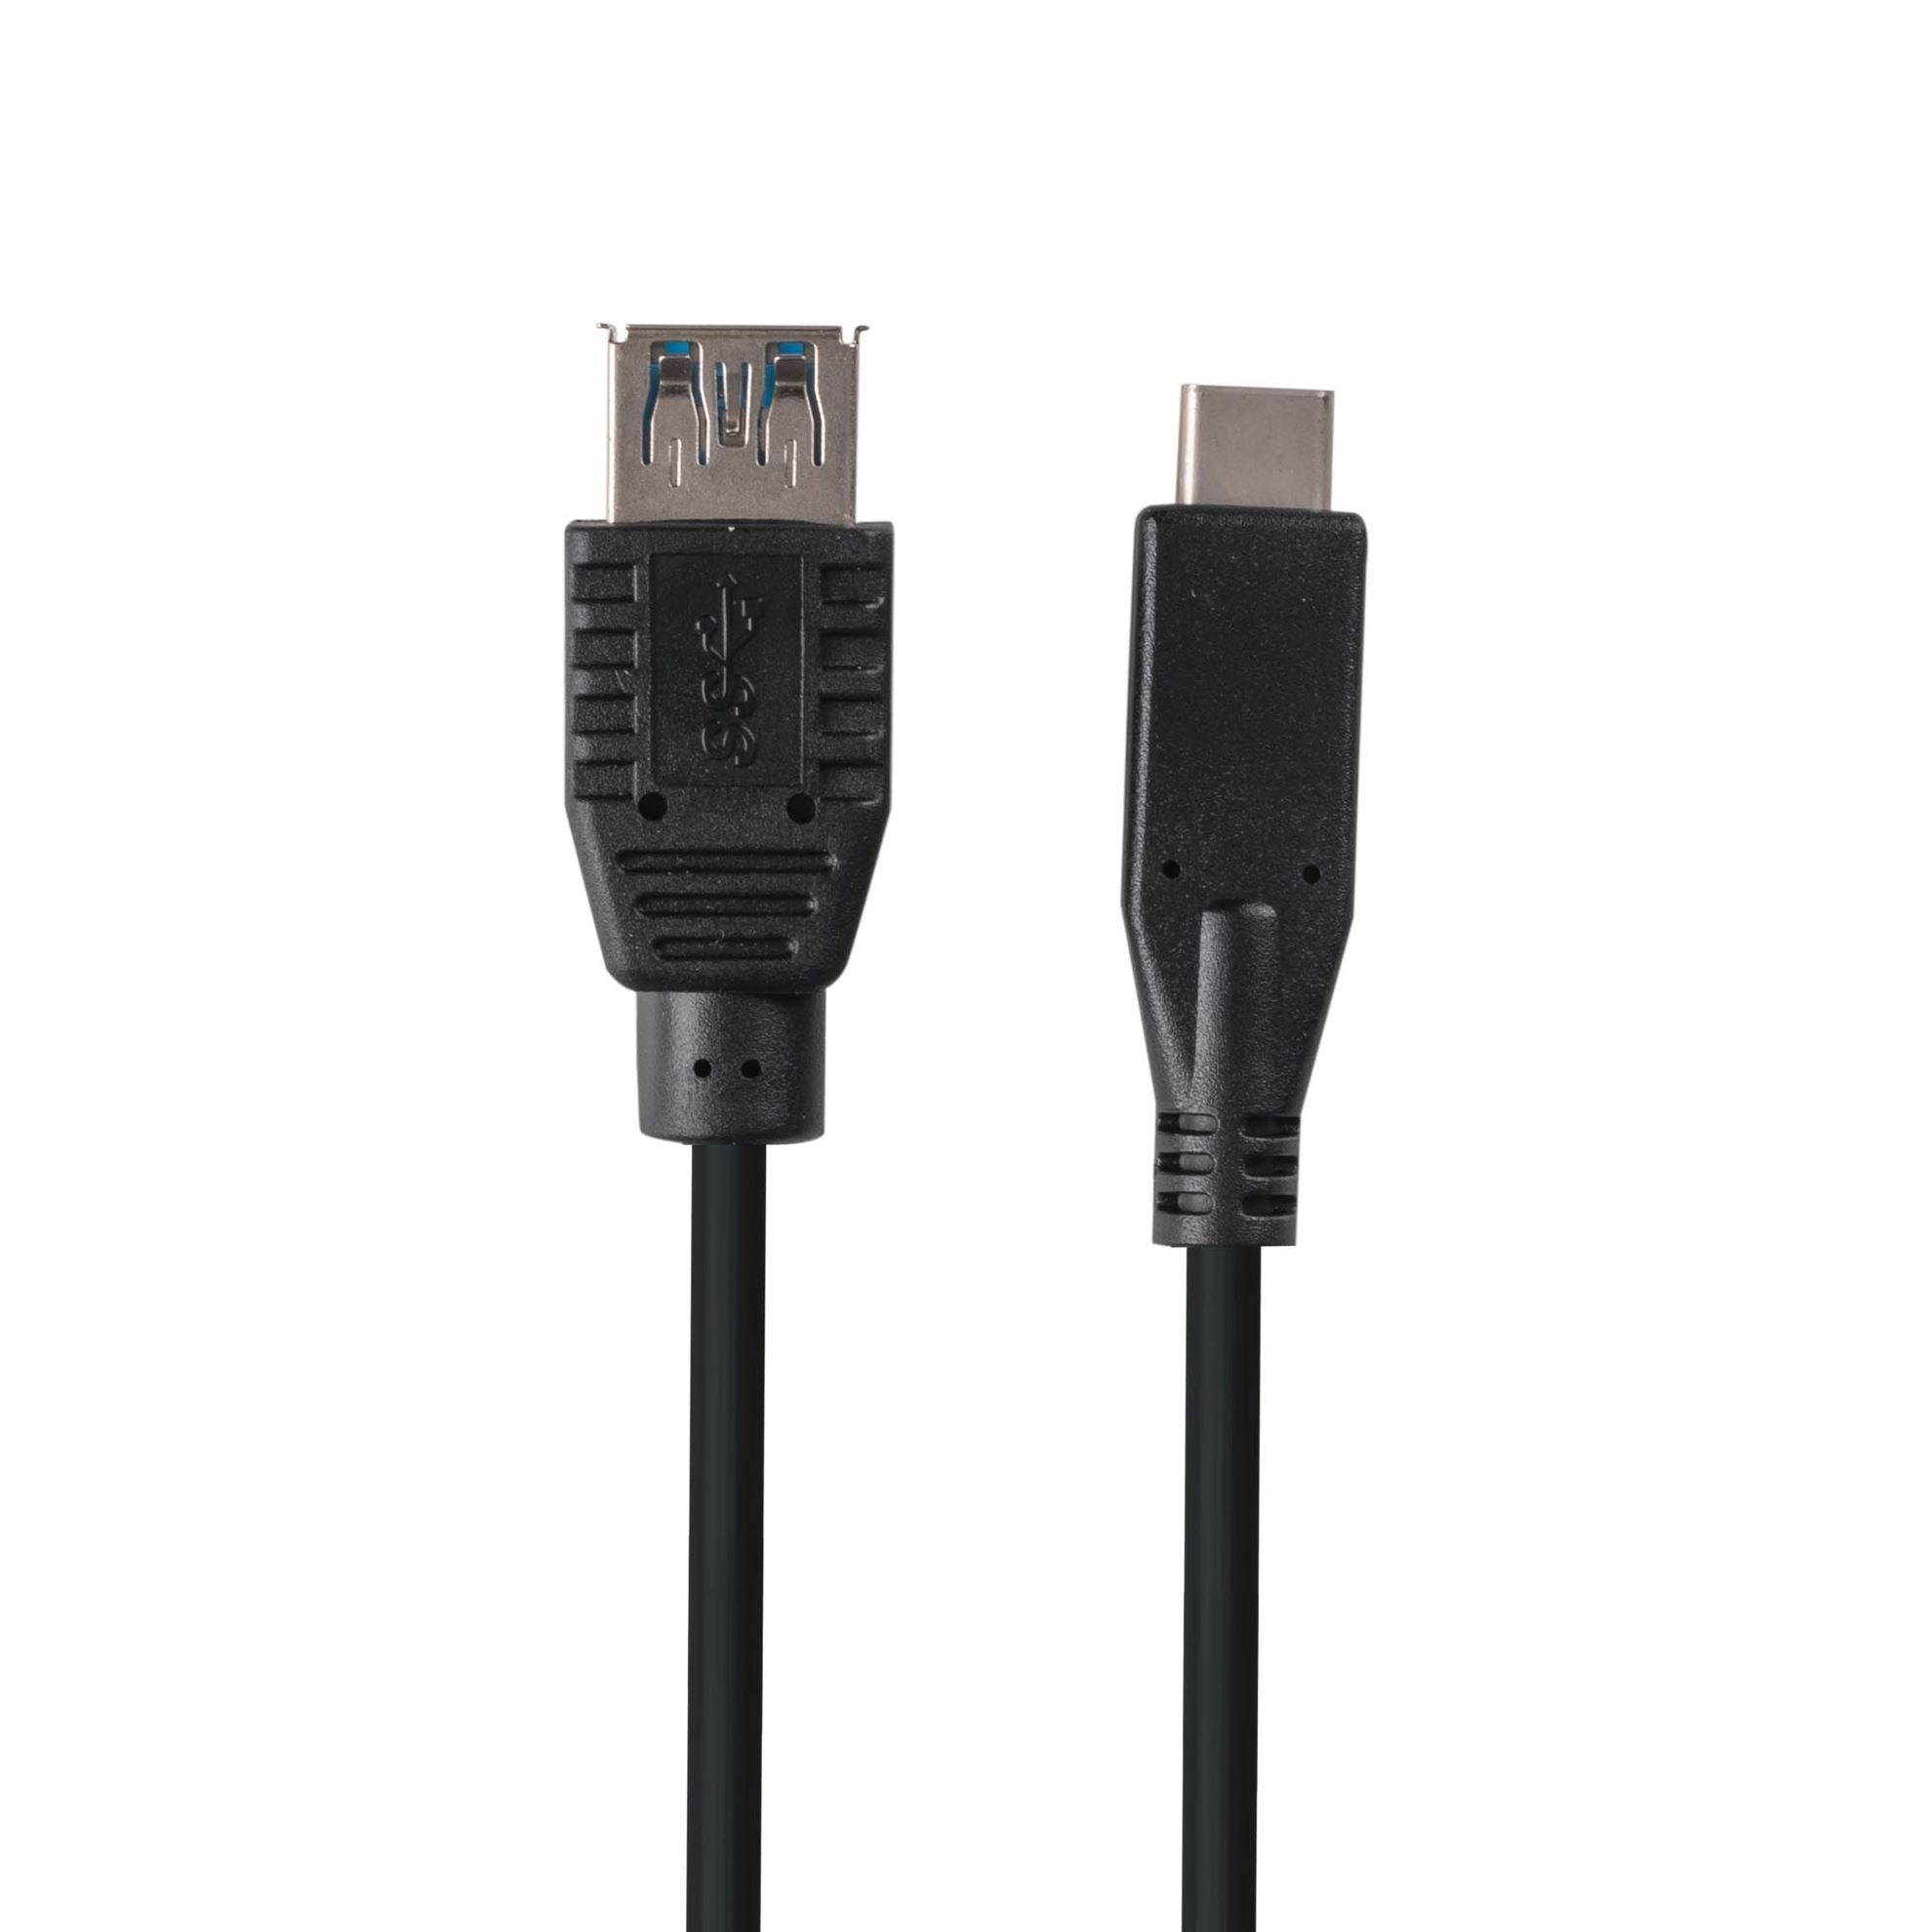 DYNAMIX_2M,_USB_3.1_USB-C_Male_to_USB-A_Female_Cable._Black_Colour. 1156